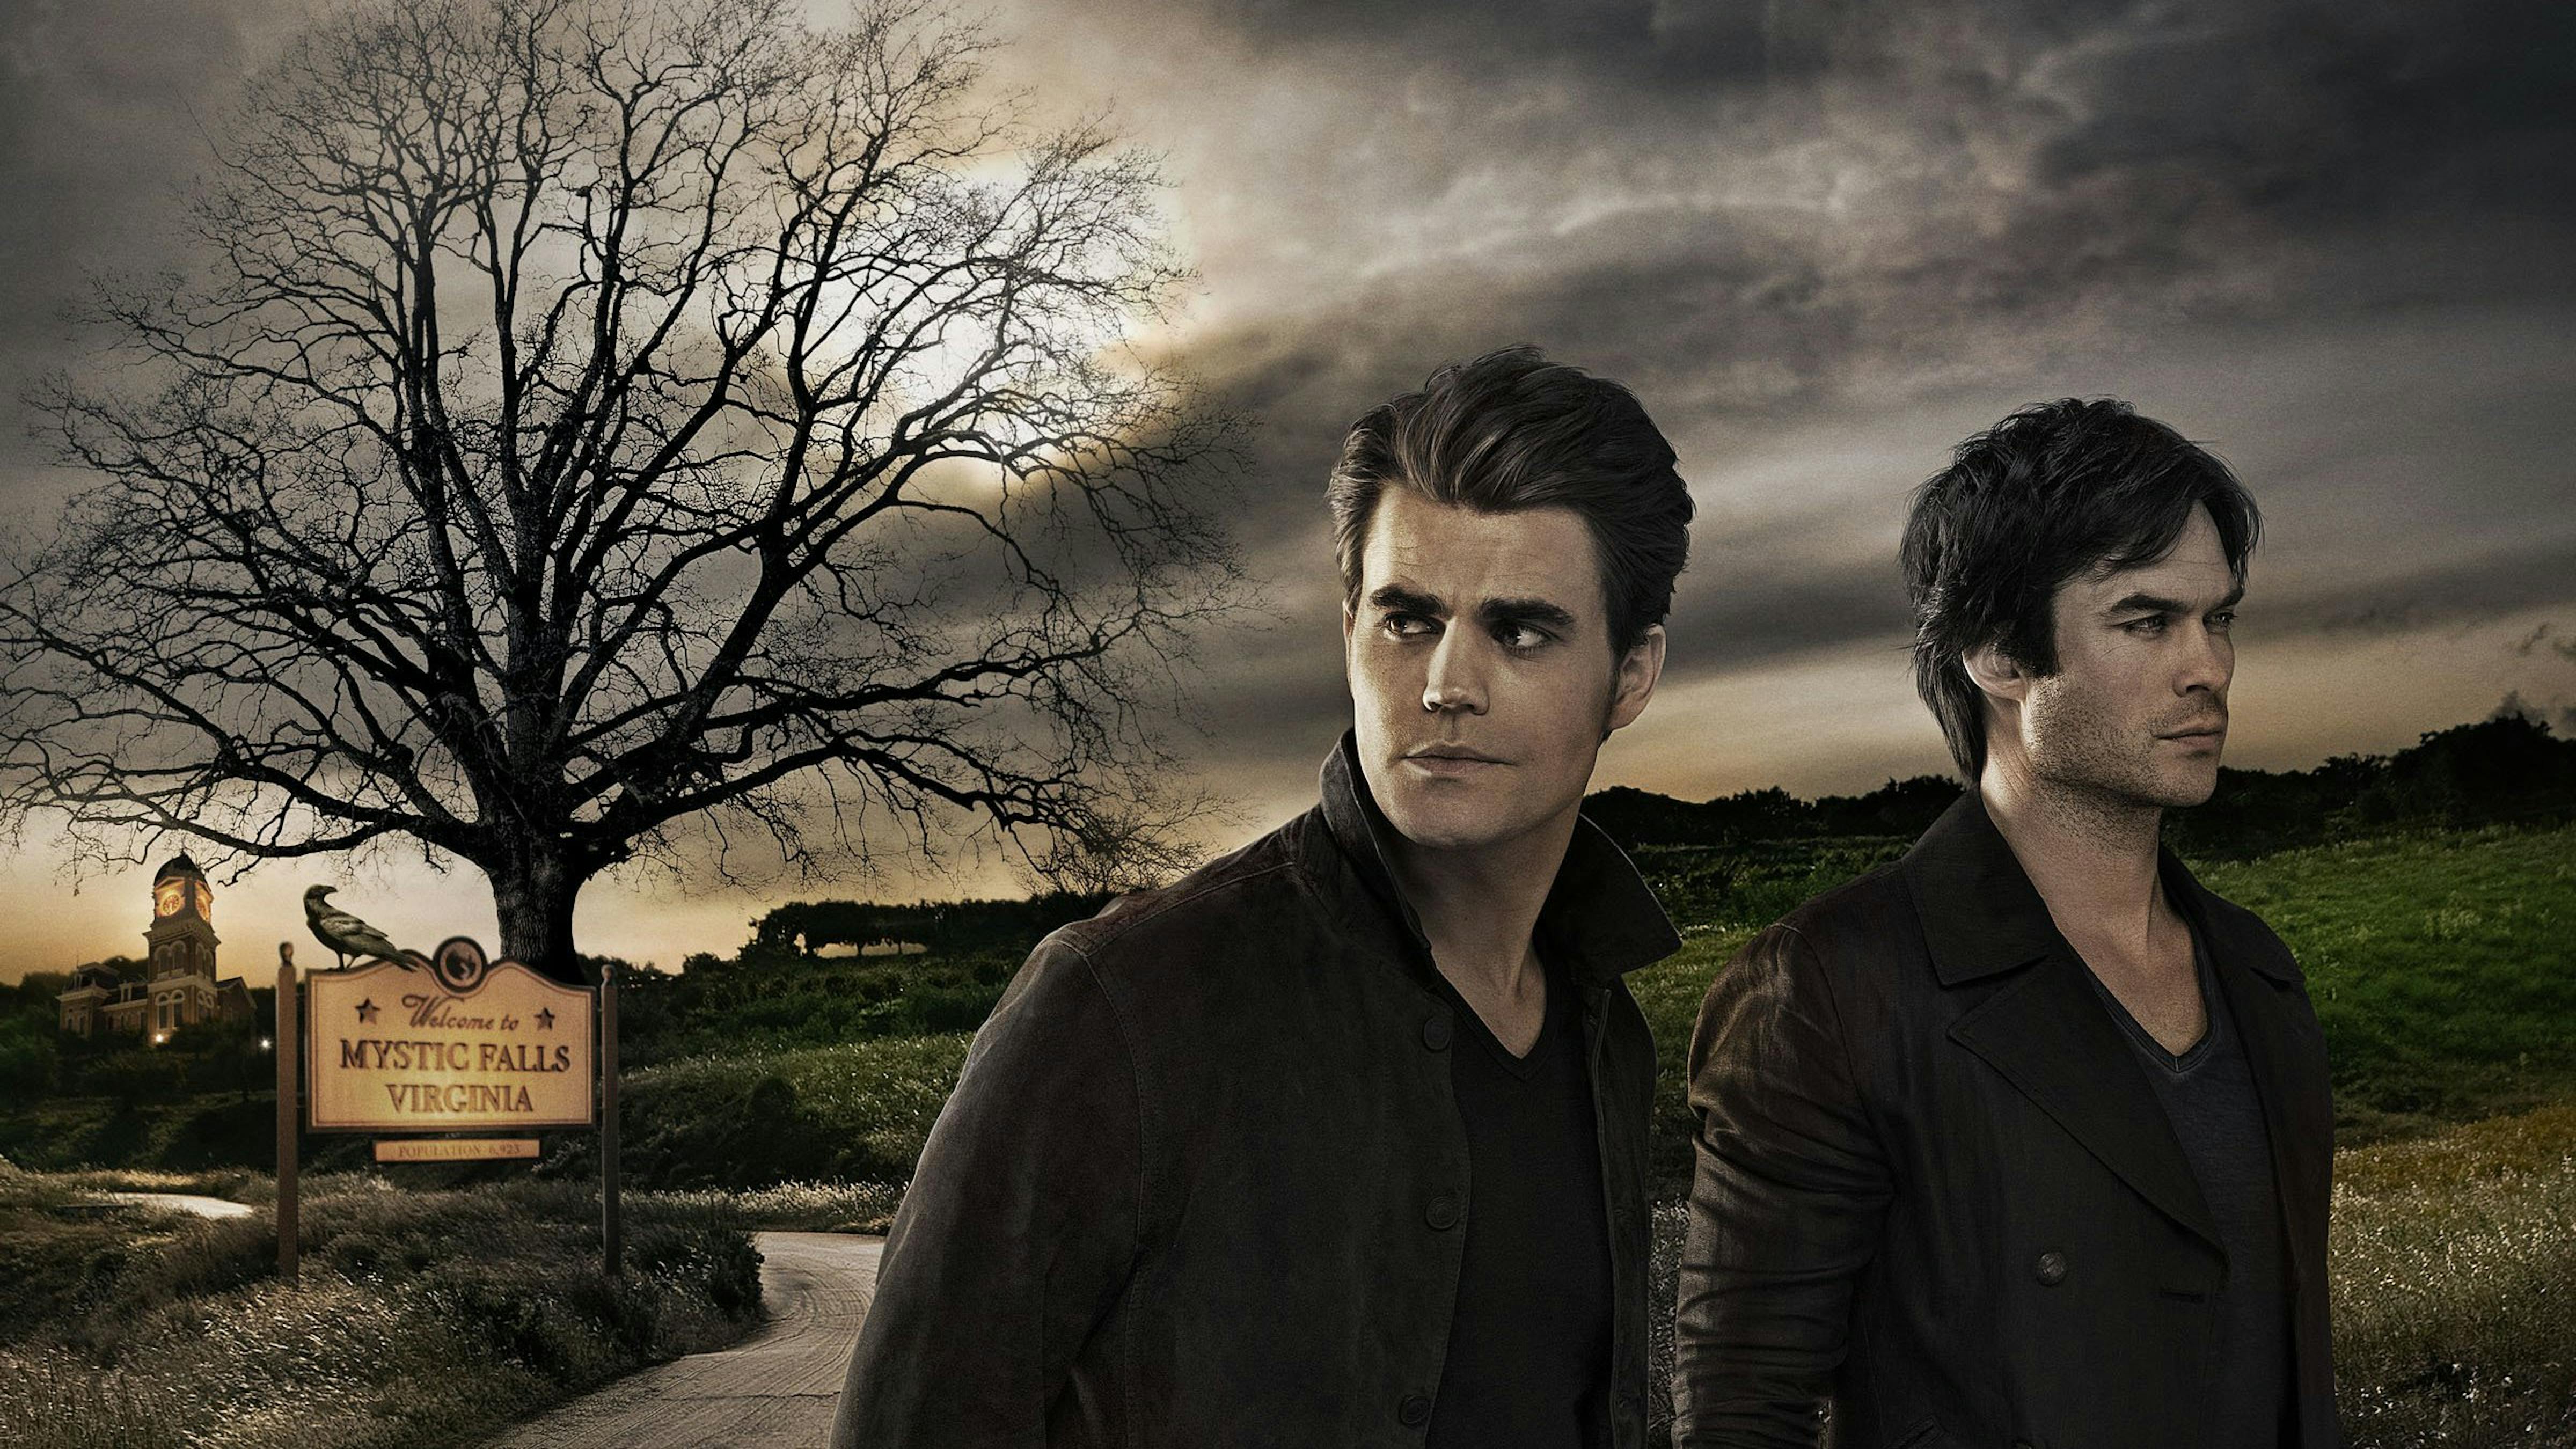 Segunda Temporada, Wiki Vampire Diaries